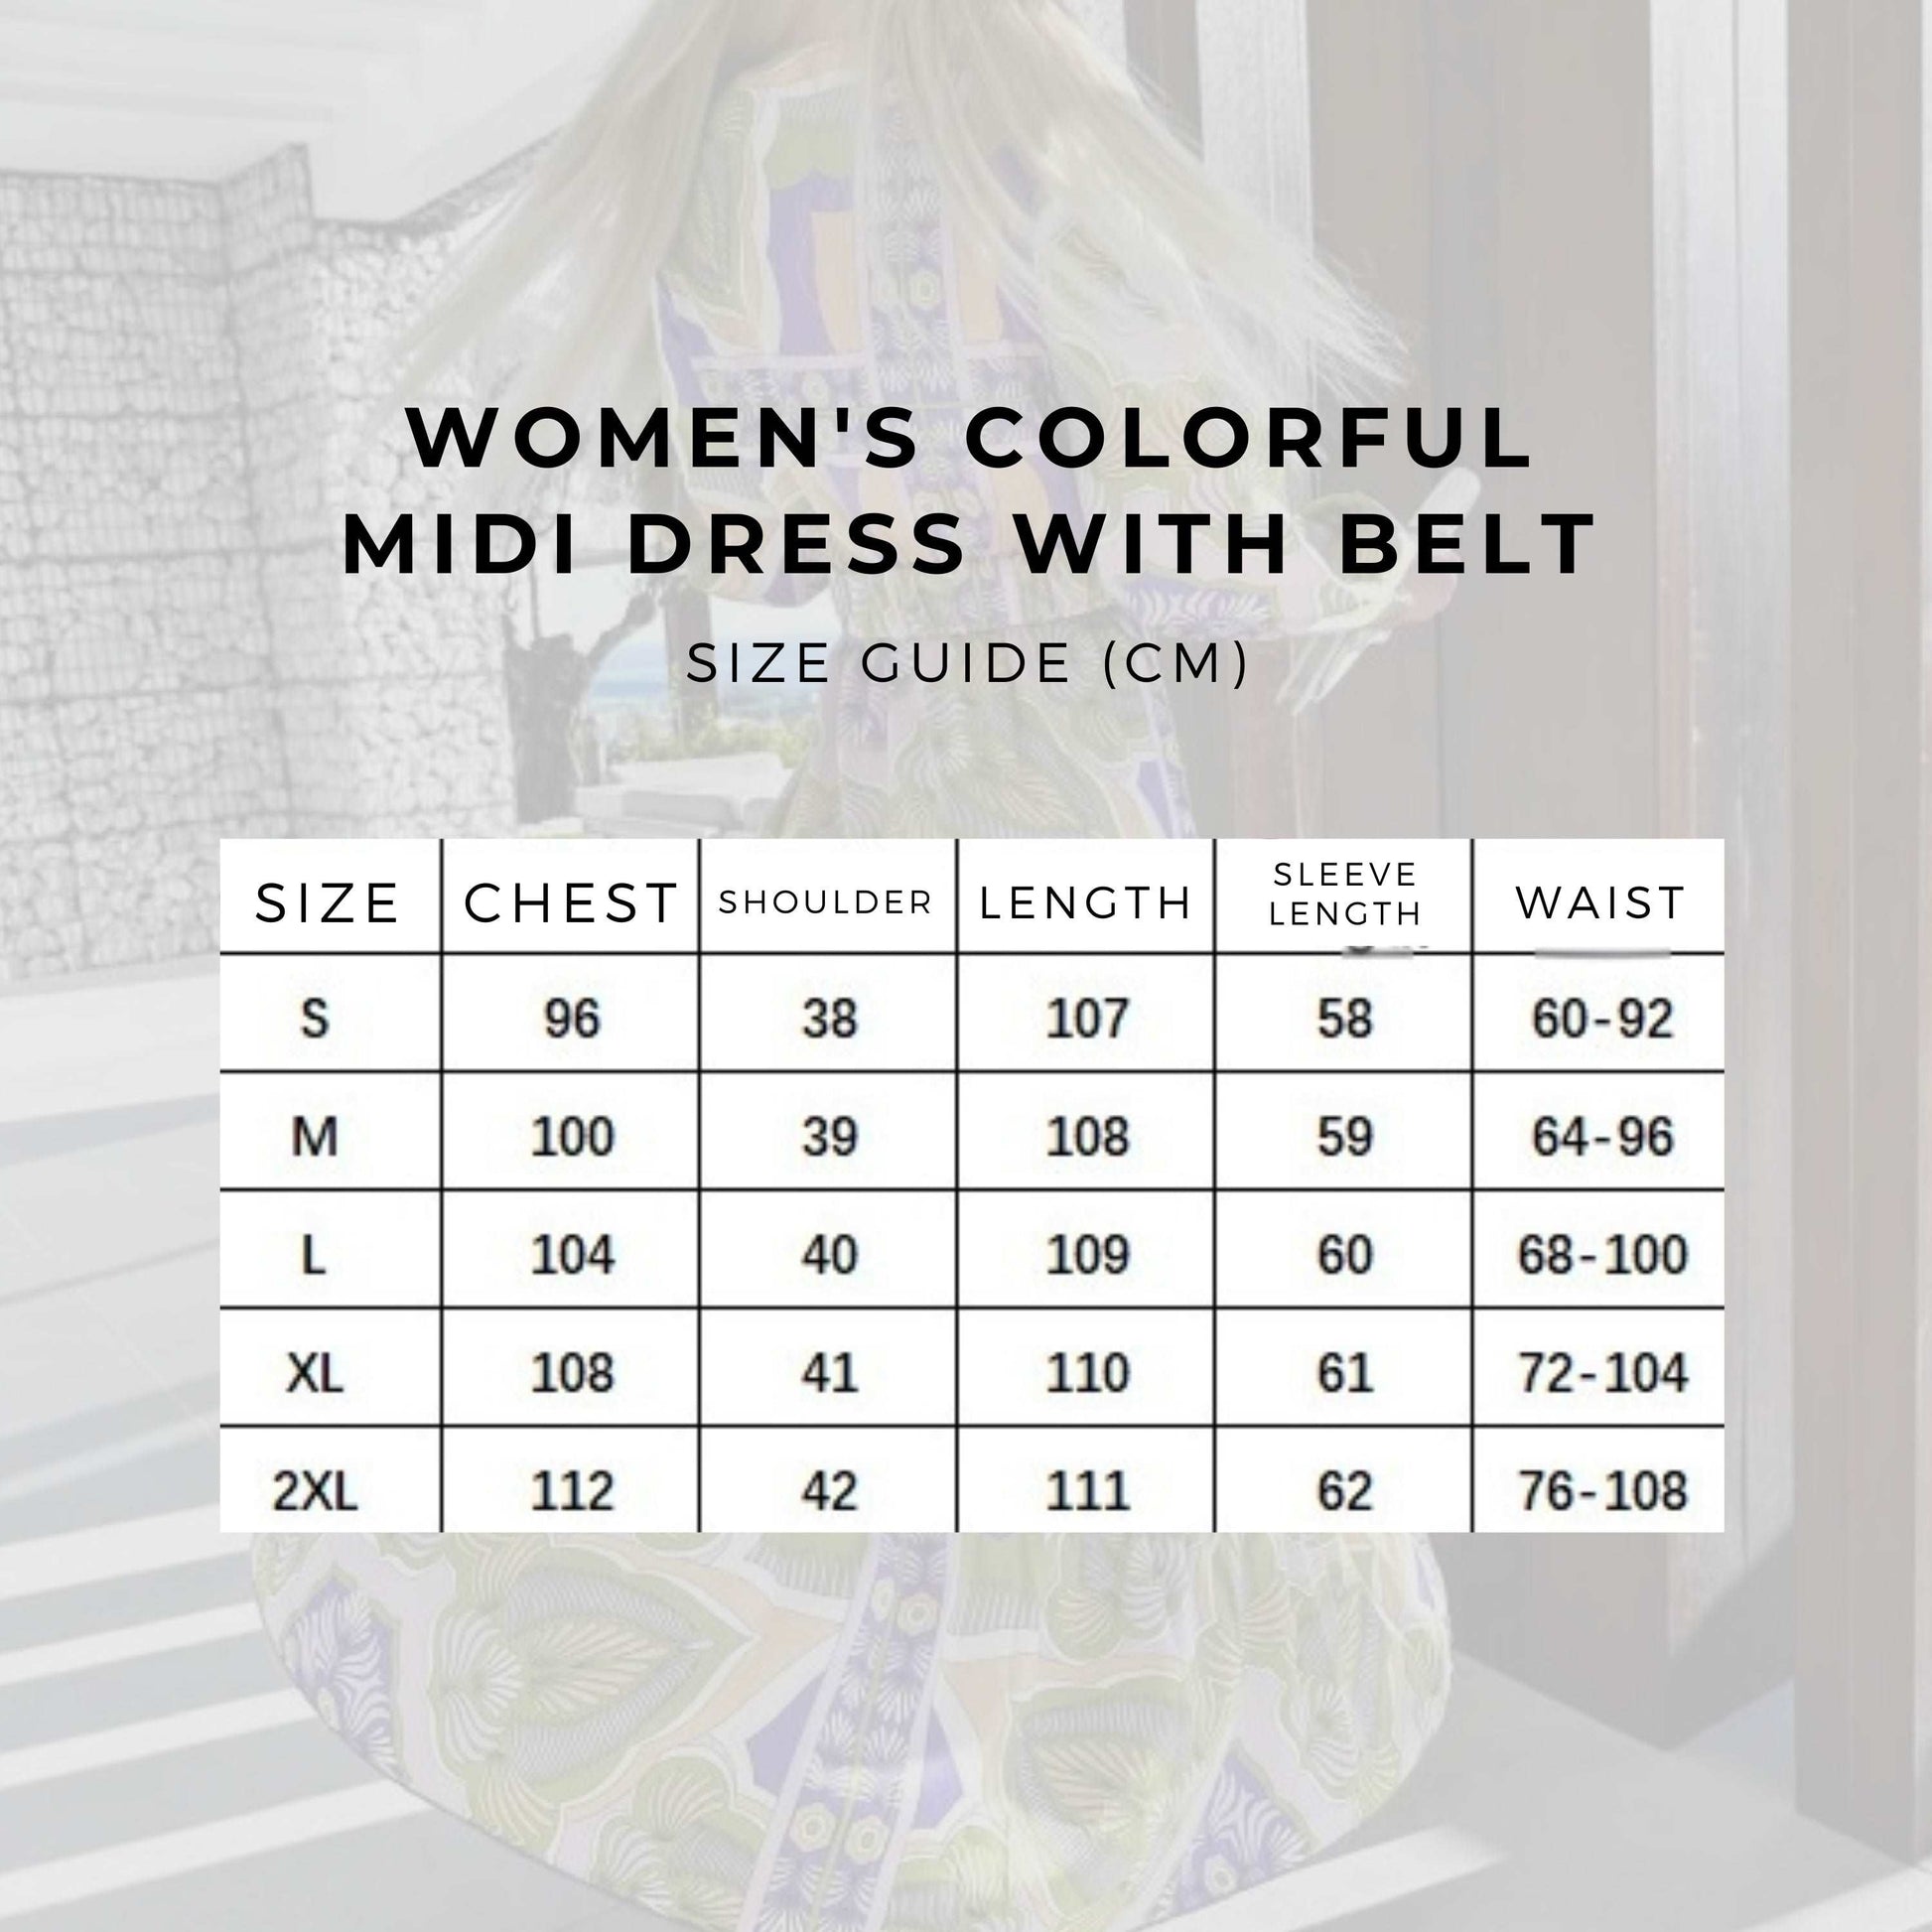 Women's Colorful Midi Dress with Belt